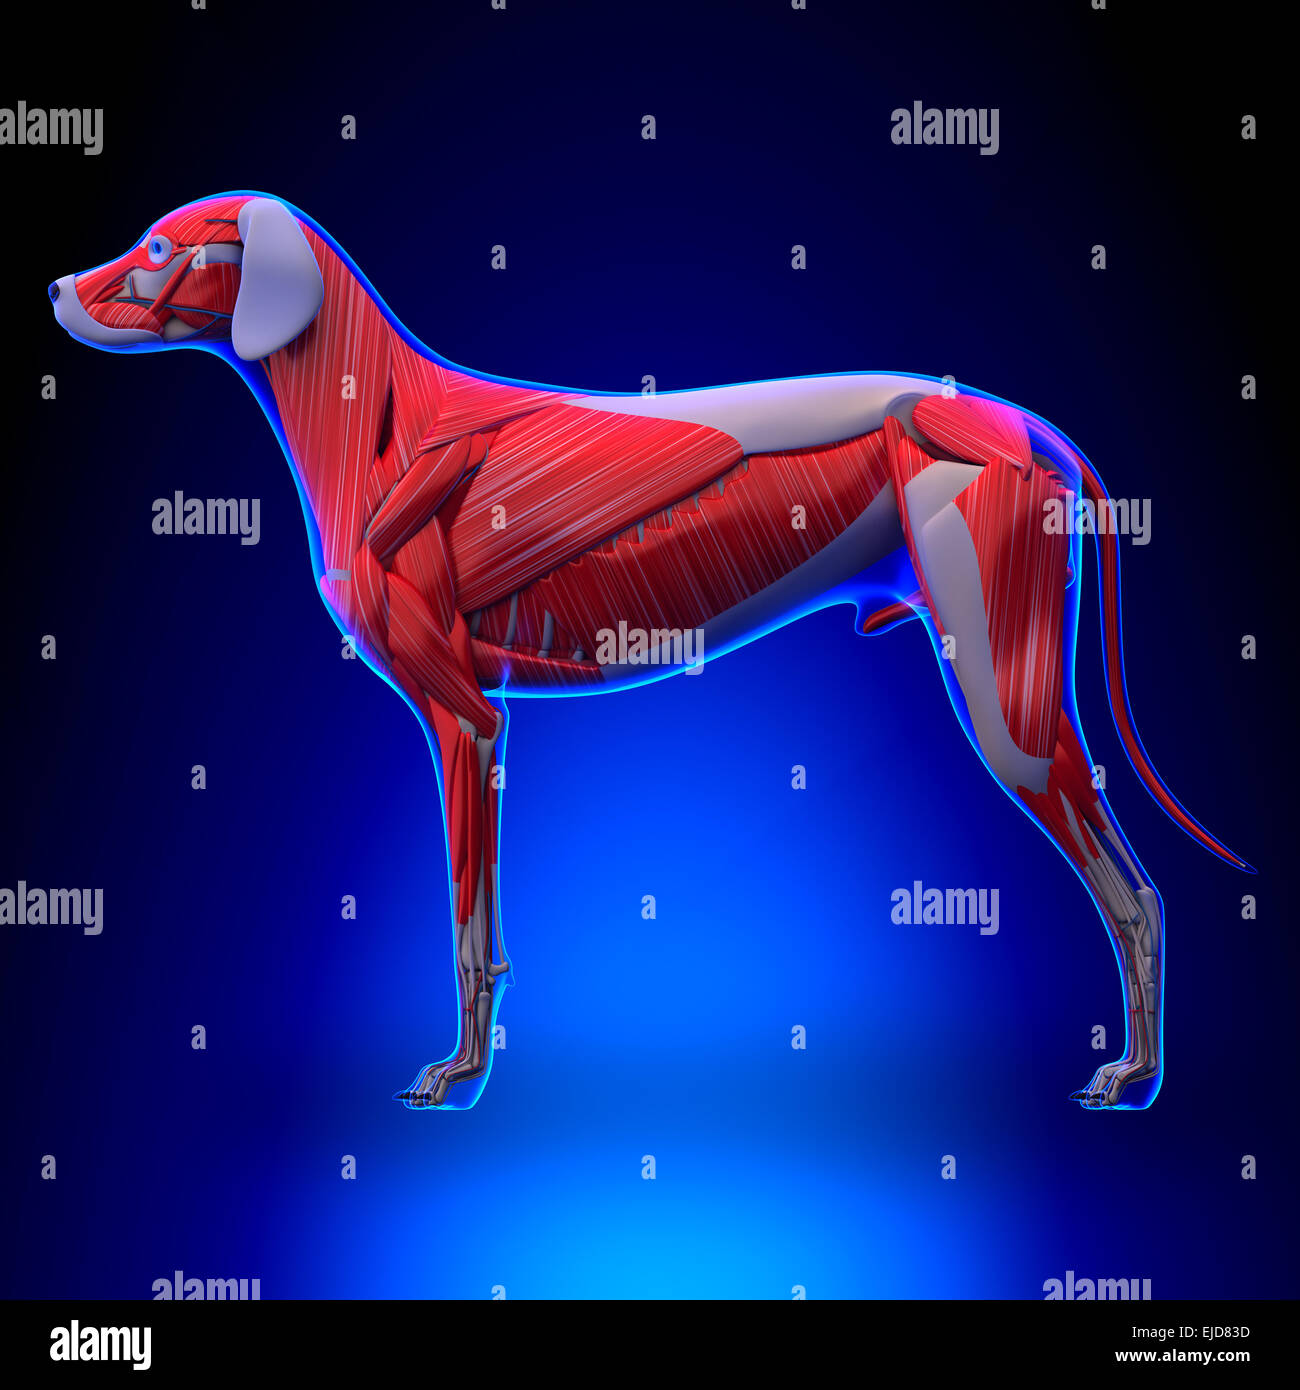 Hund Muskeln Anatomie - Muskulatur des Hundes Stockfotografie - Alamy